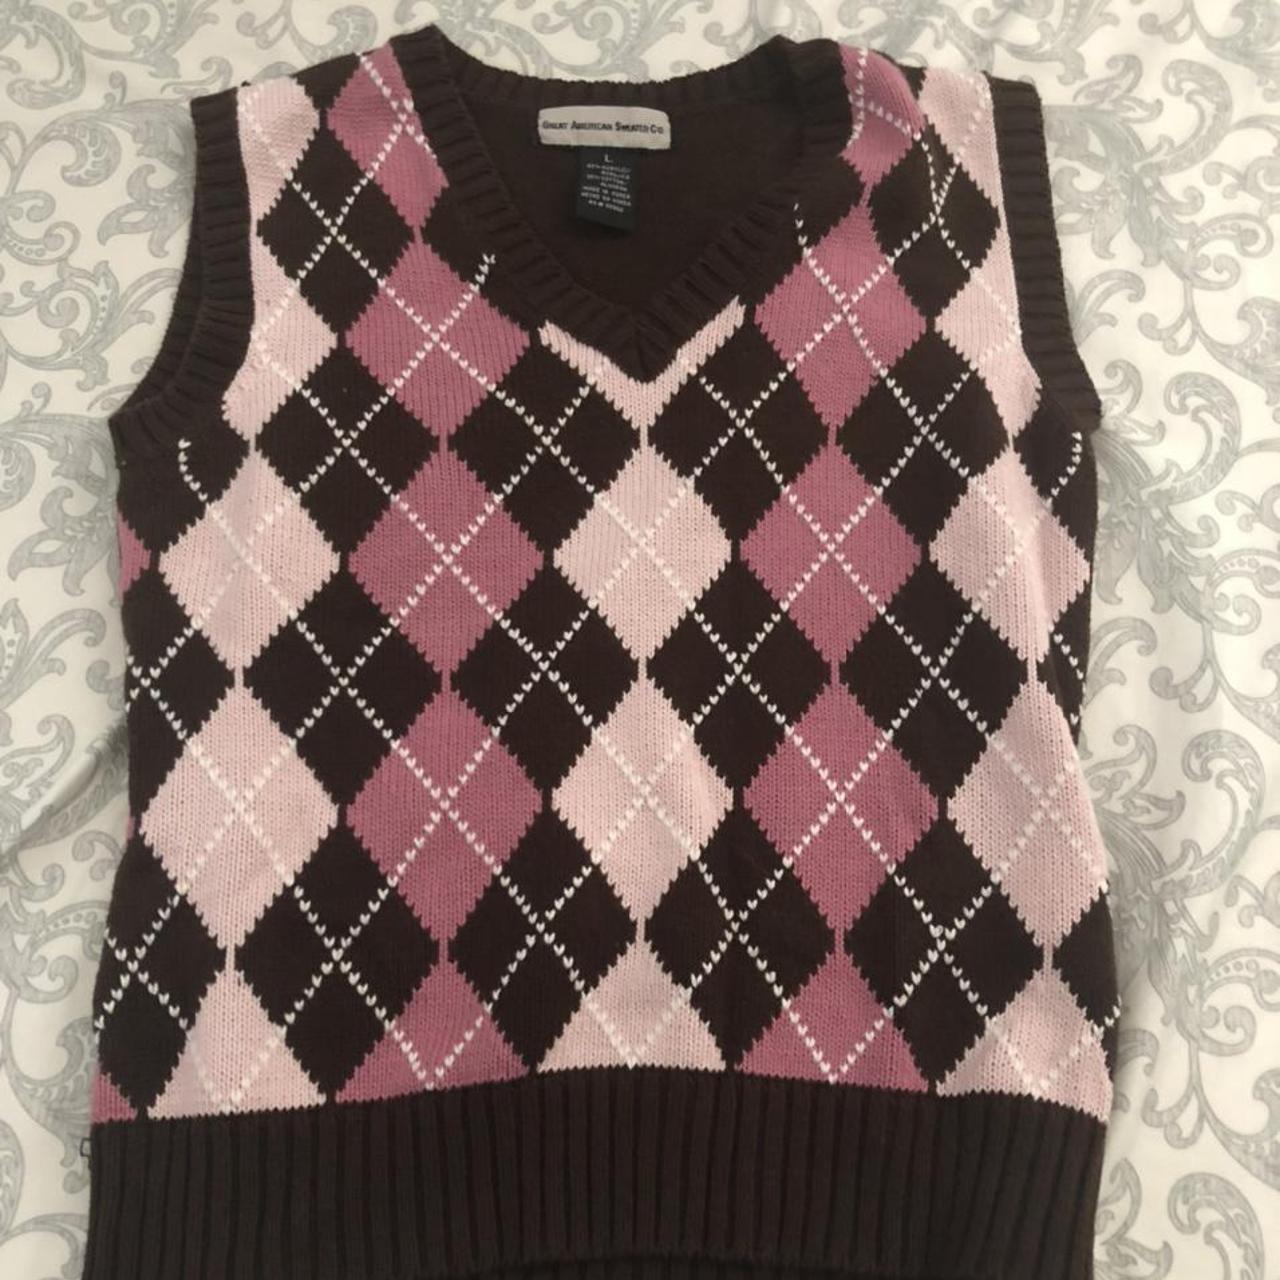 Pink/brown Argyle Sweater vest Fits Xs-M Super... - Depop